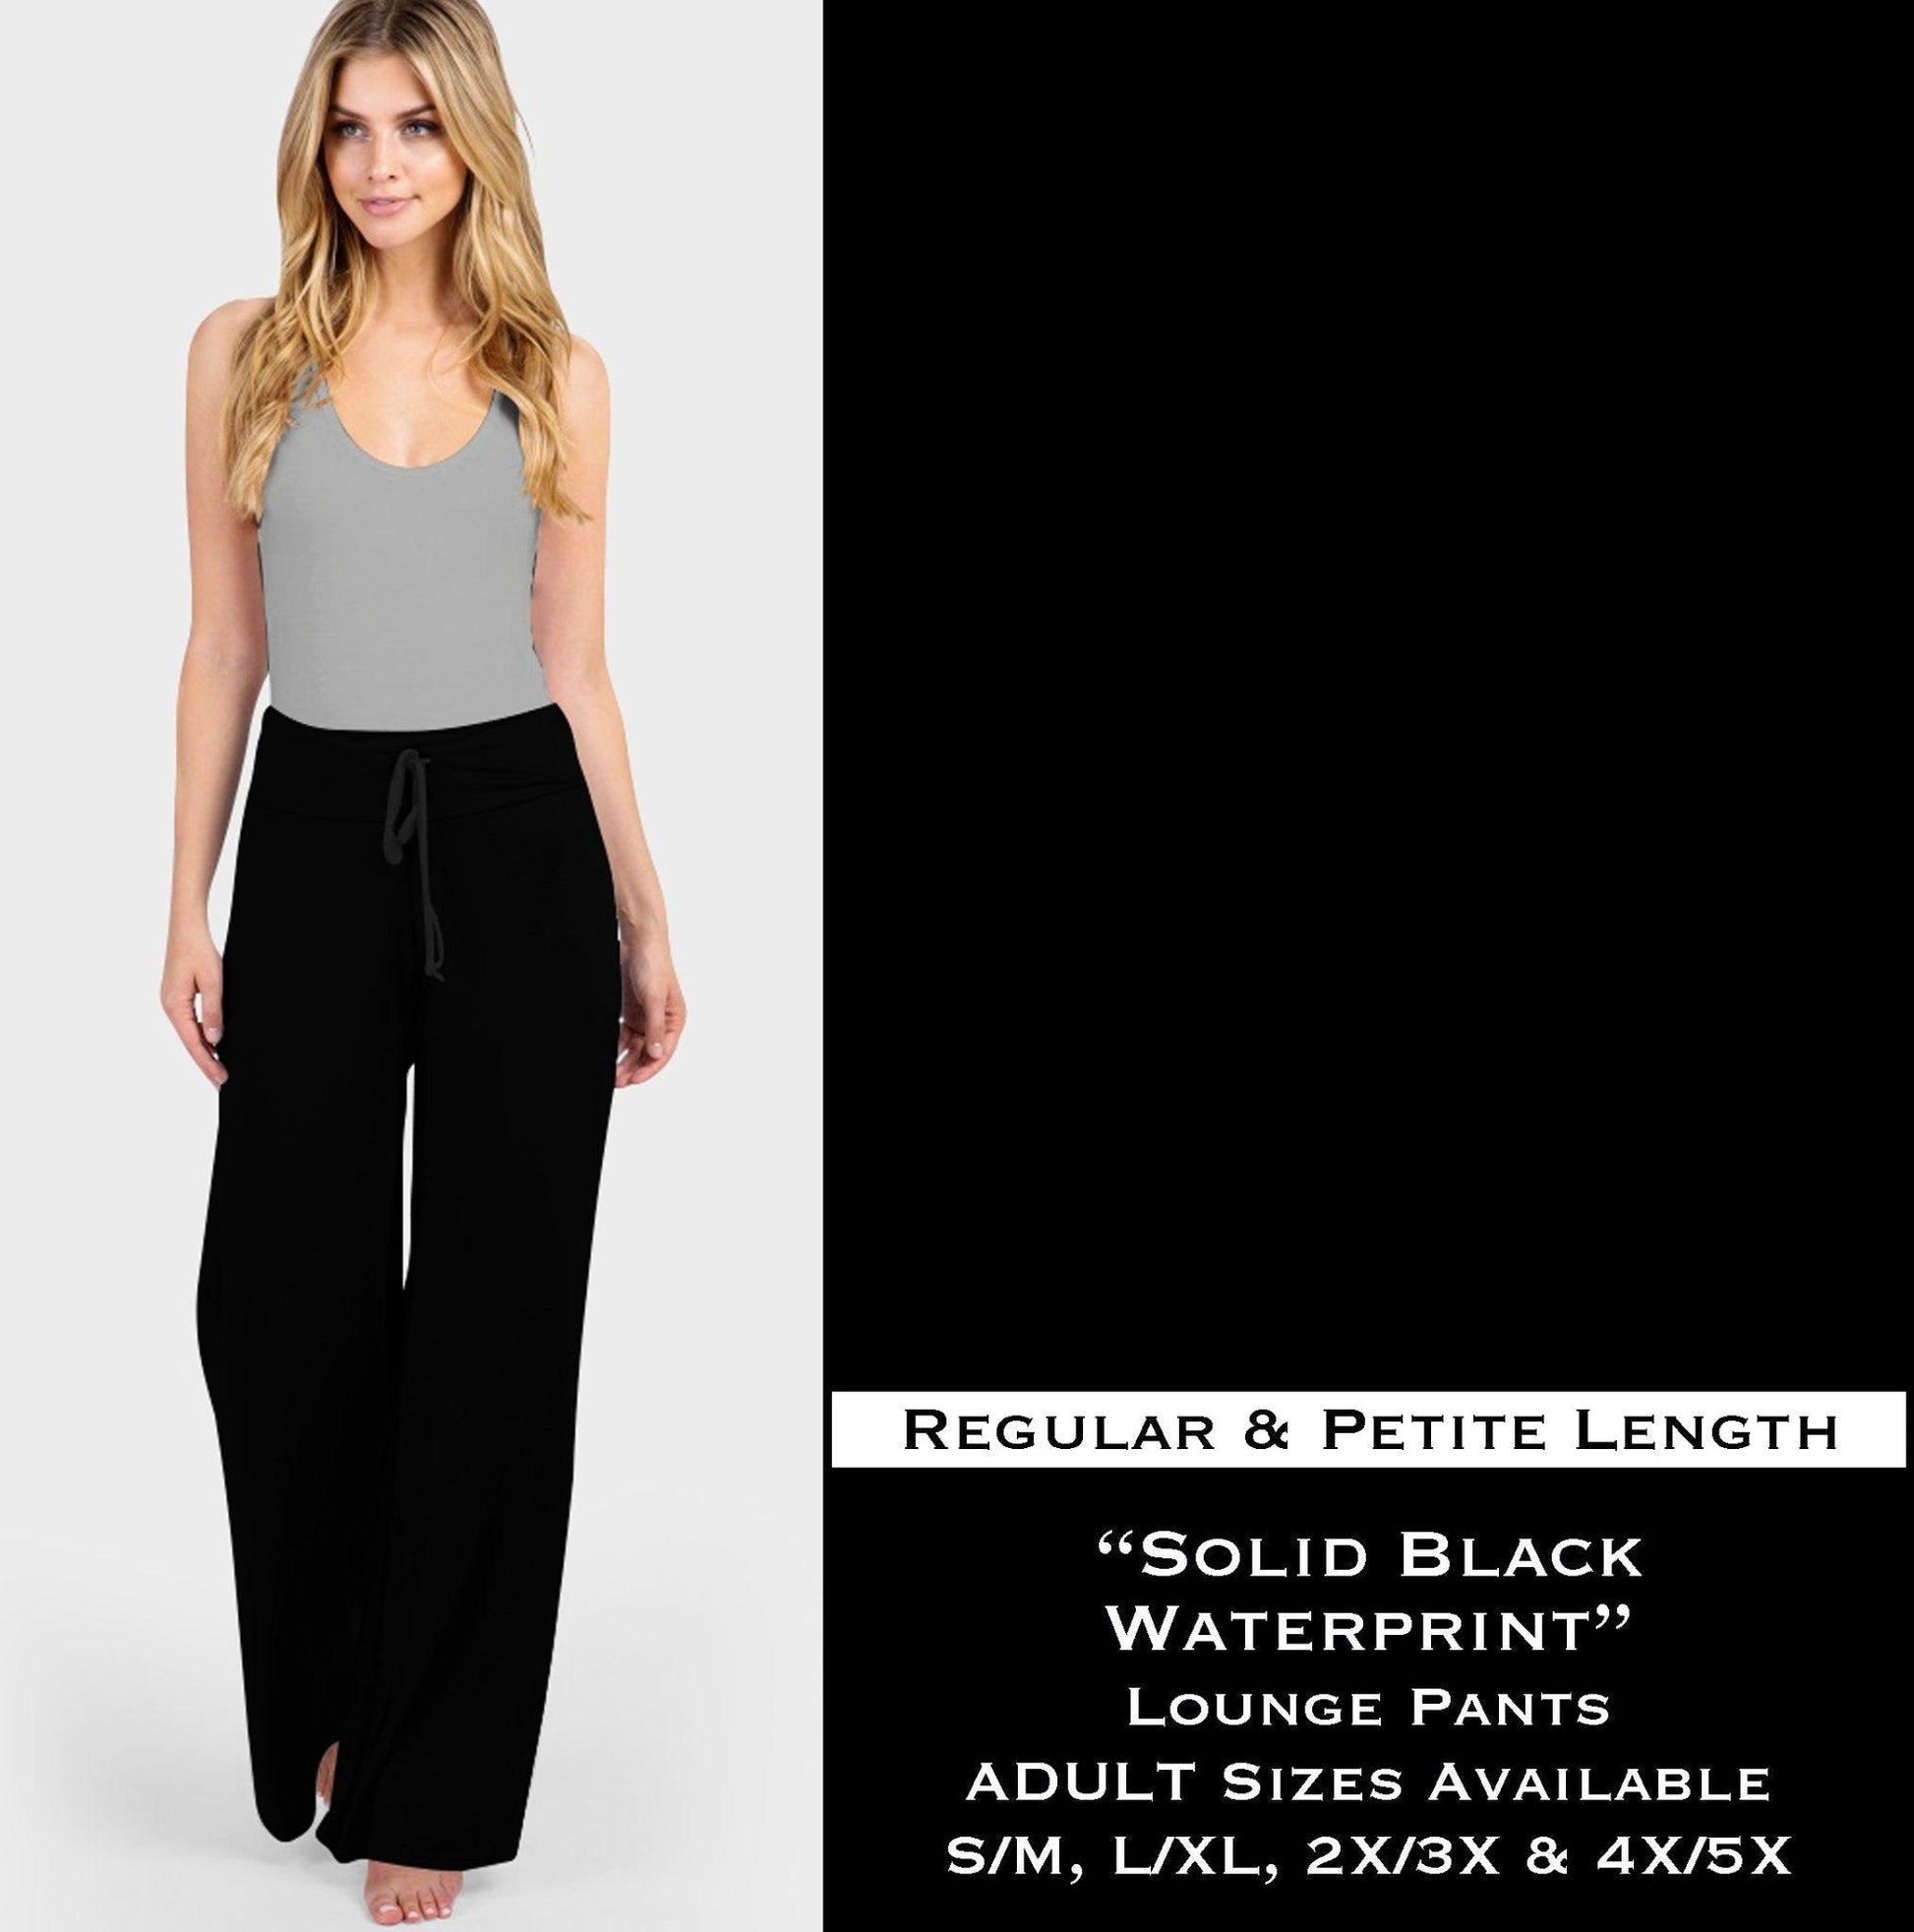 Solid Black Waterprint Lounge Pants - That’s So Fletch Boutique 